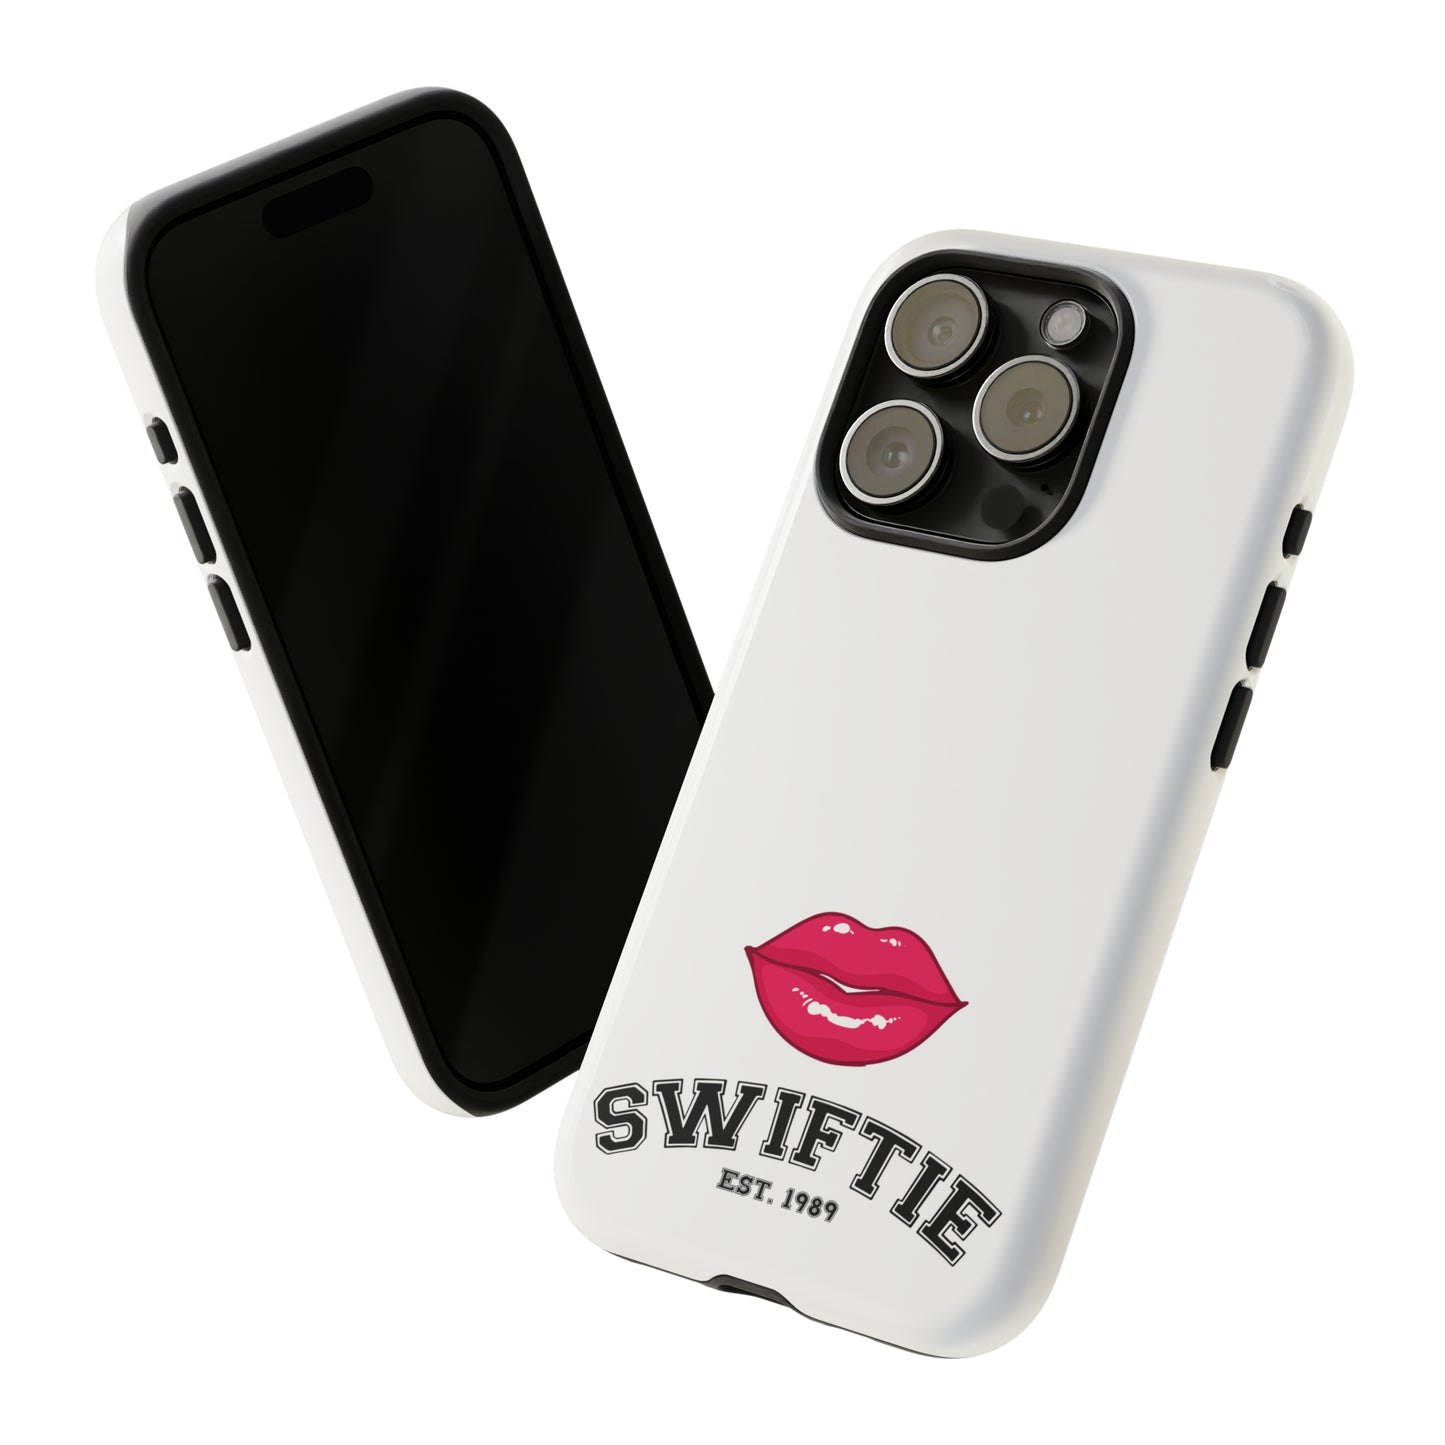 Swiftie Red Lips Phone Case